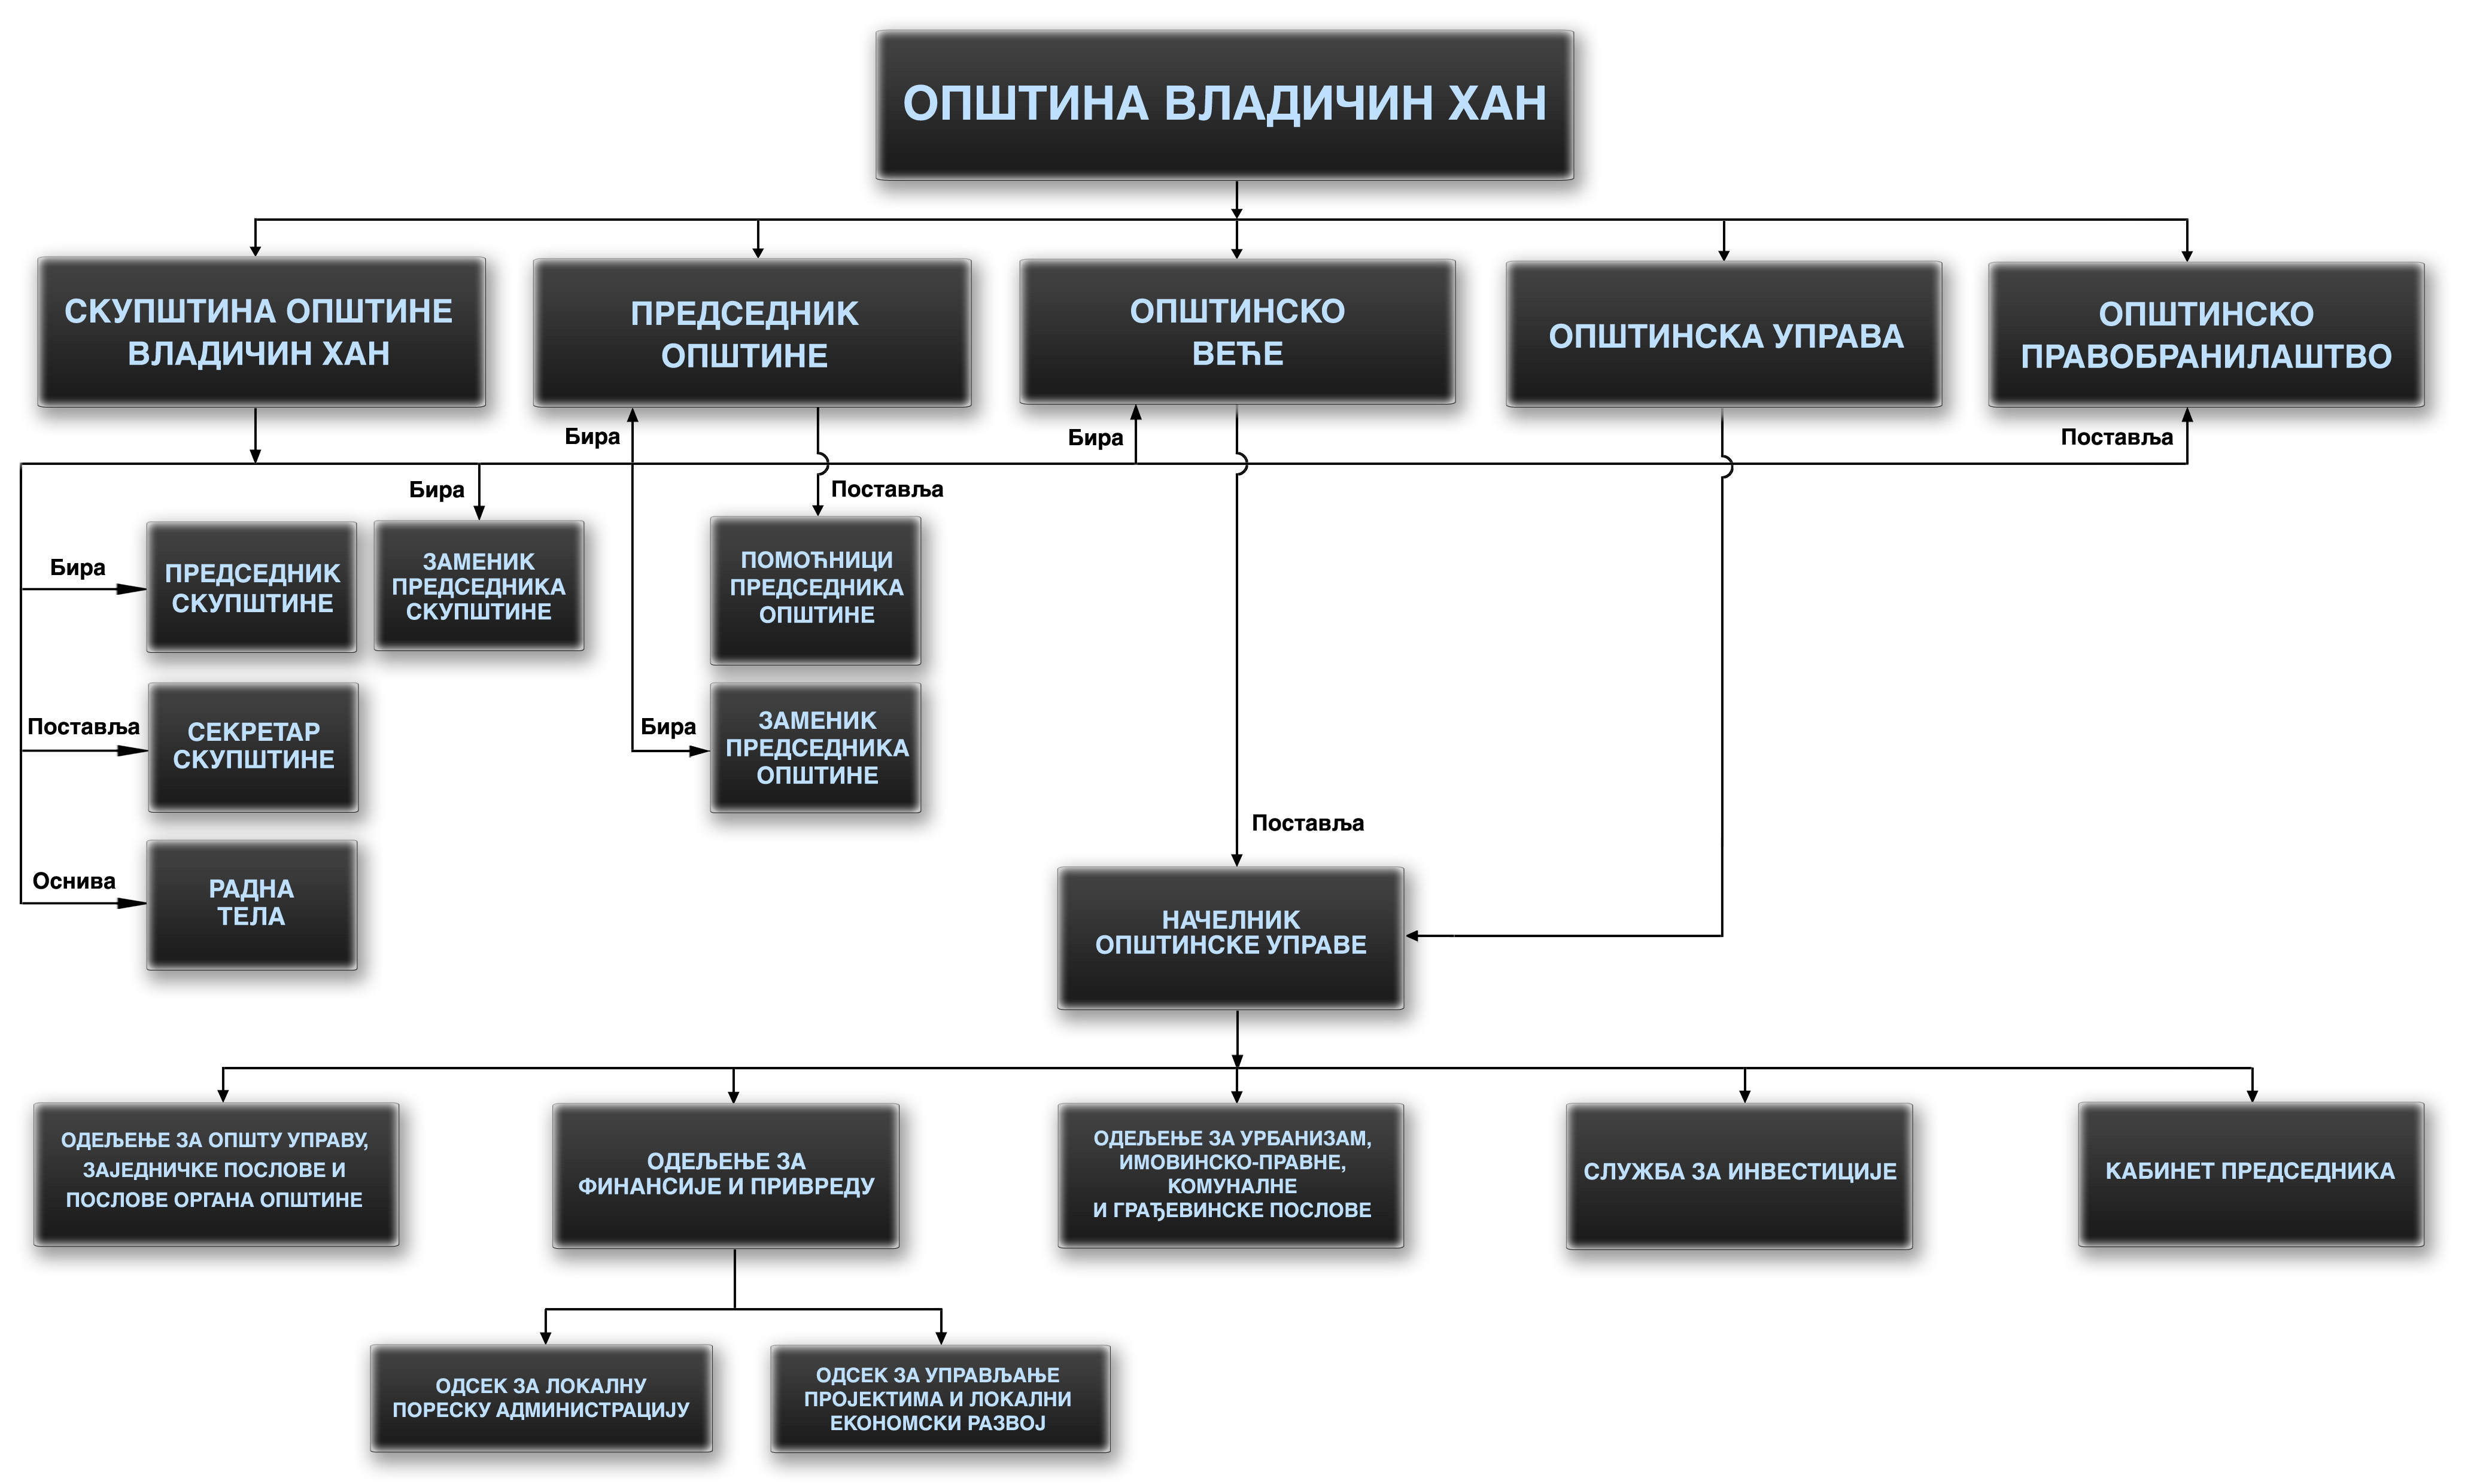 Grafiki prikaz organizacione strukture Optine Vladiin Han